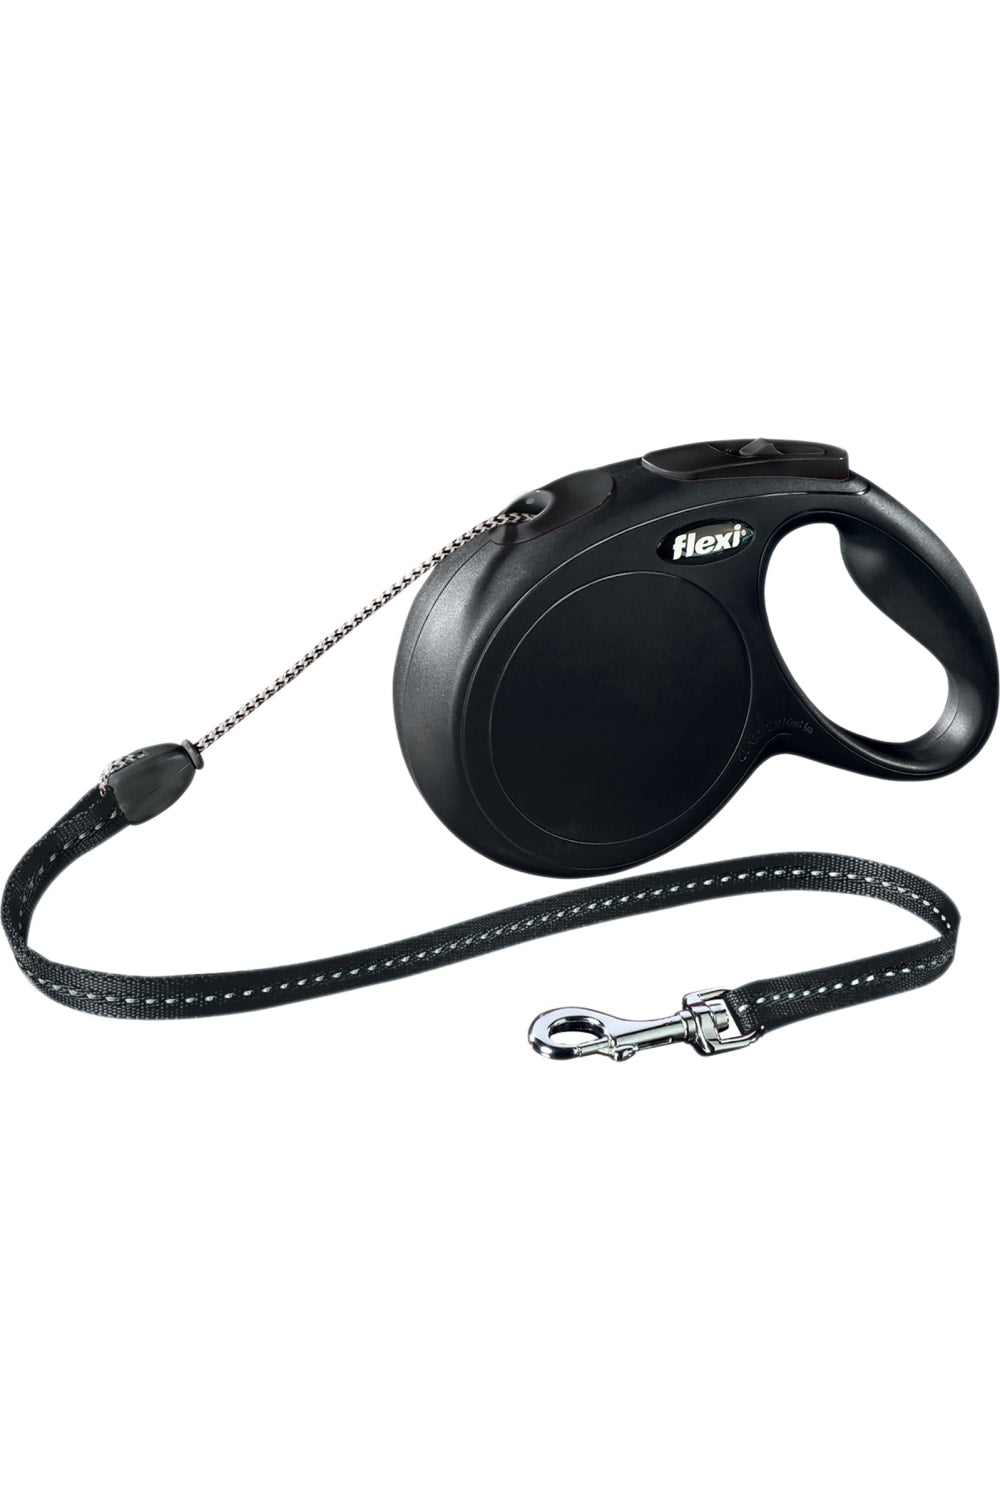 Flexi New Classic Cord Dog Leash (Black) (Medium - 16ft)